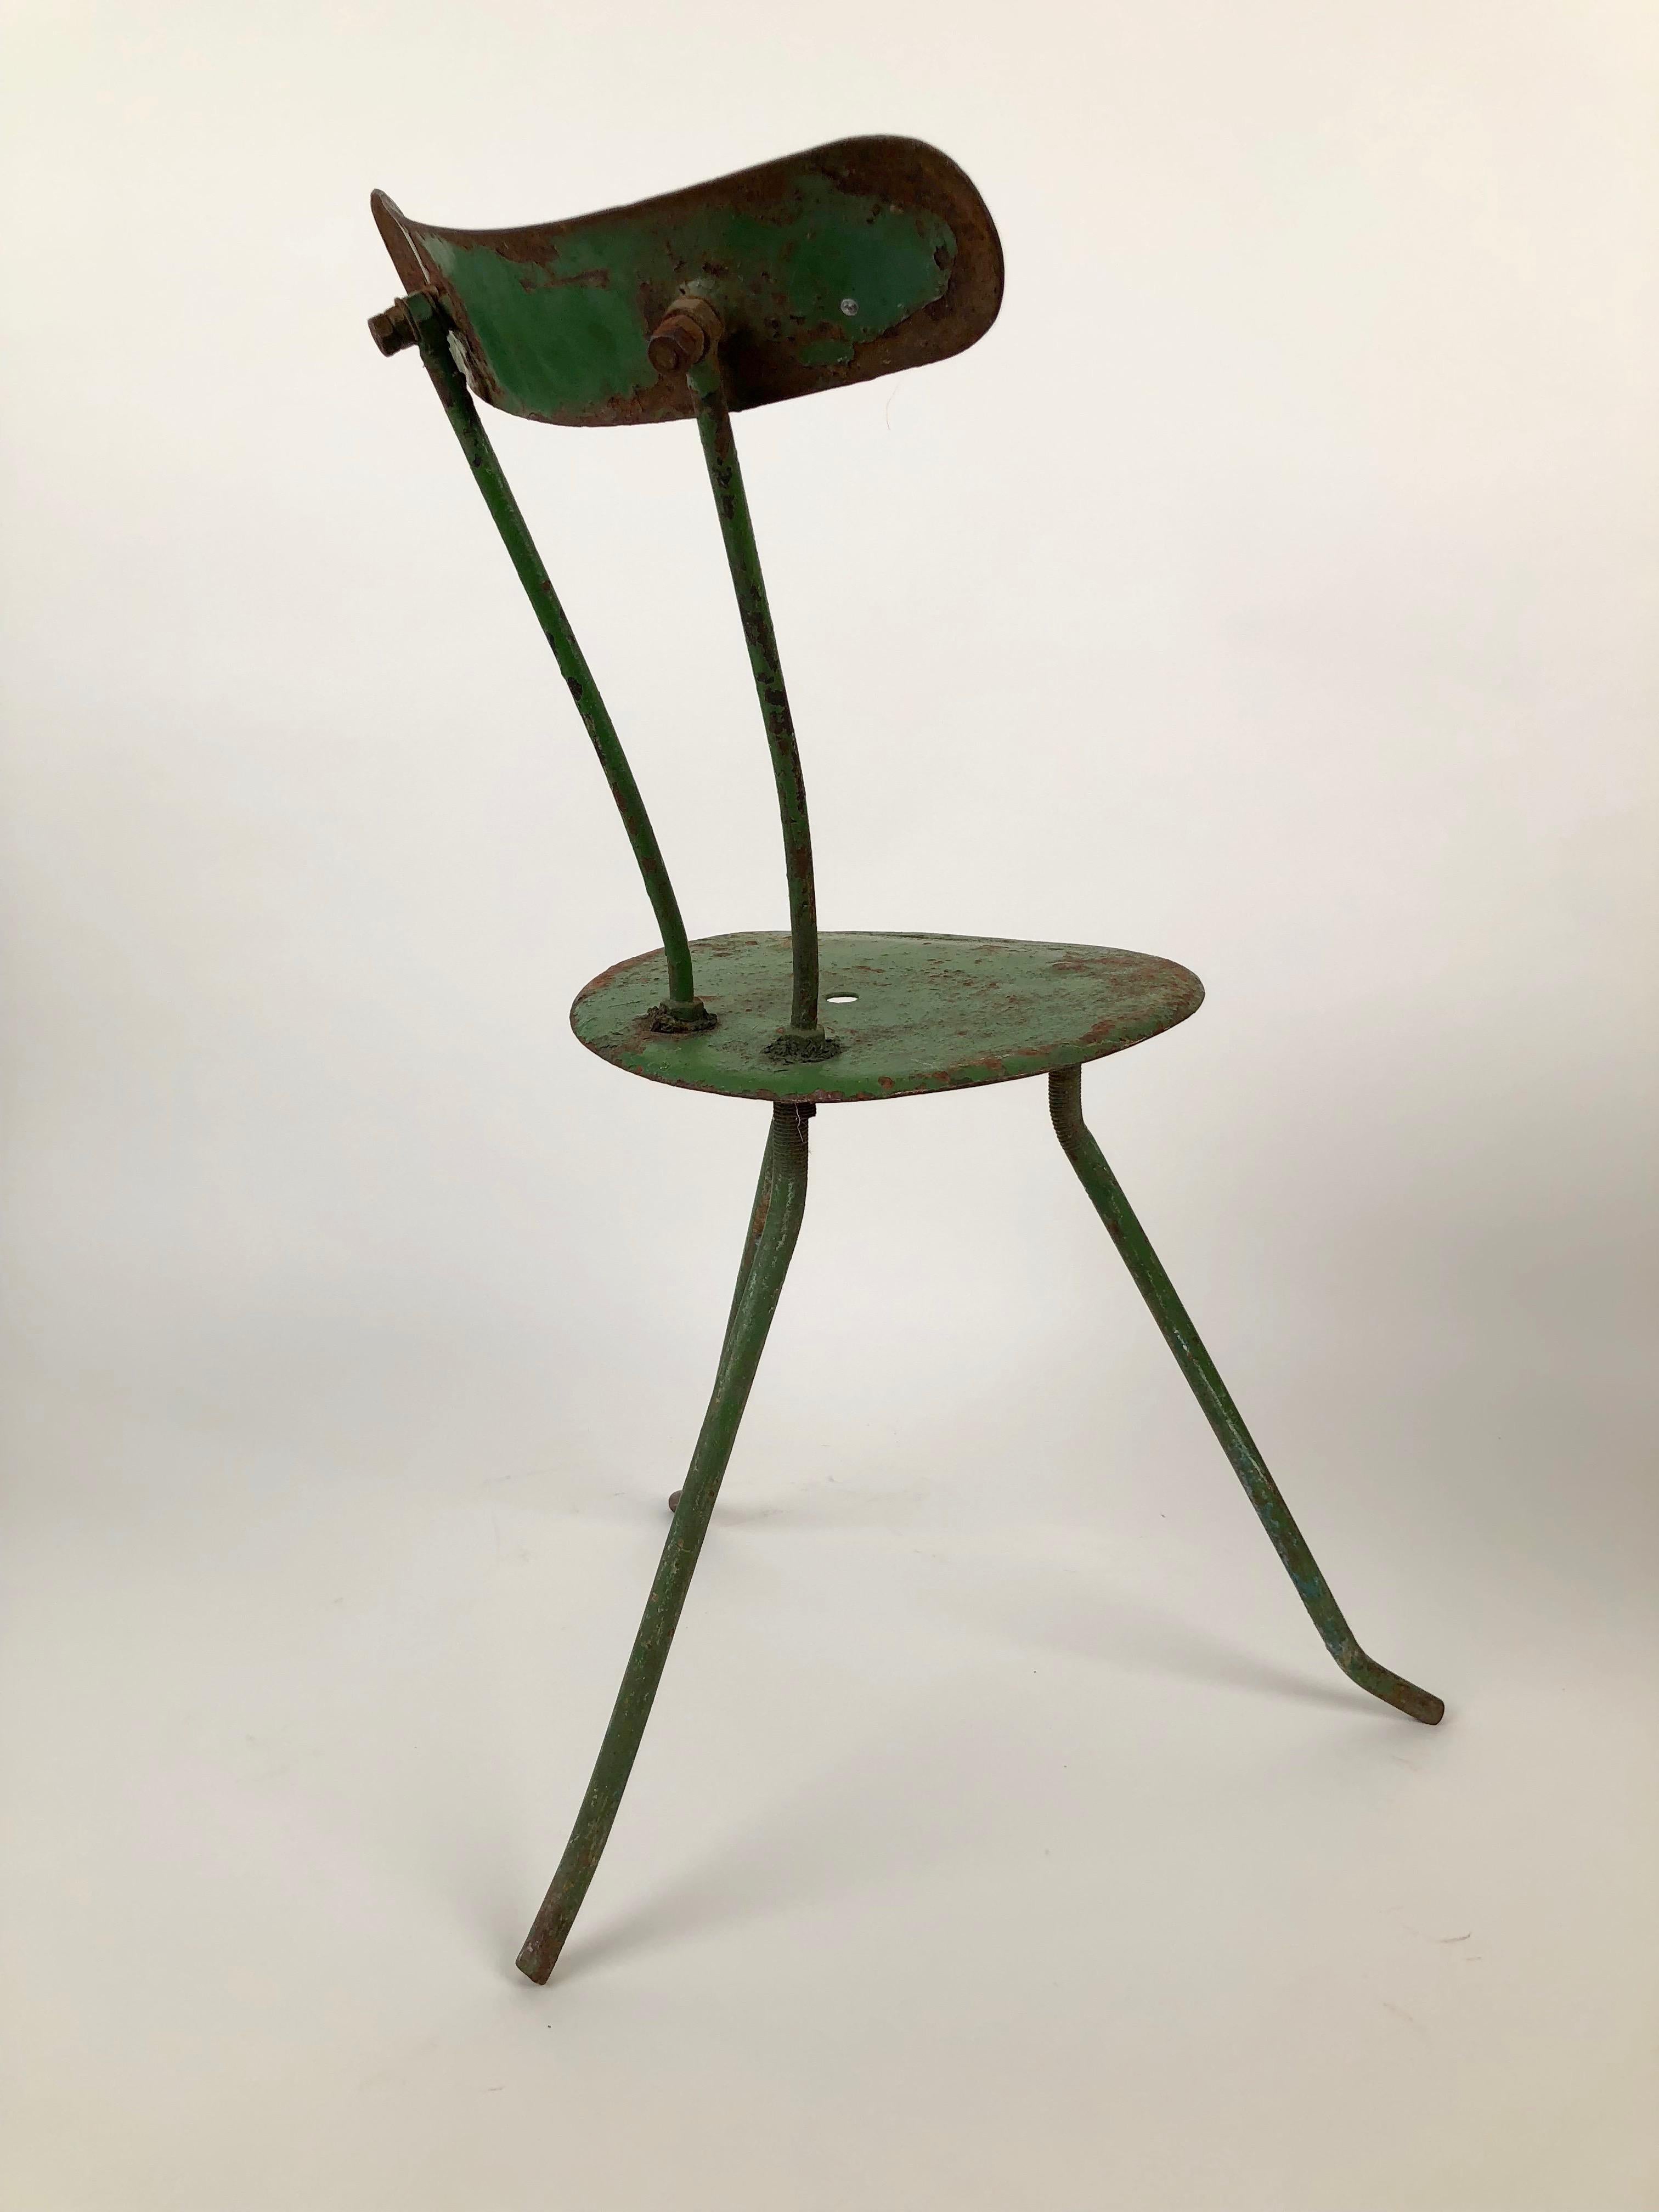 Pair of Handmade Metal Chairs, 1950s, from the Balaton Lake Region, Hungary For Sale 3